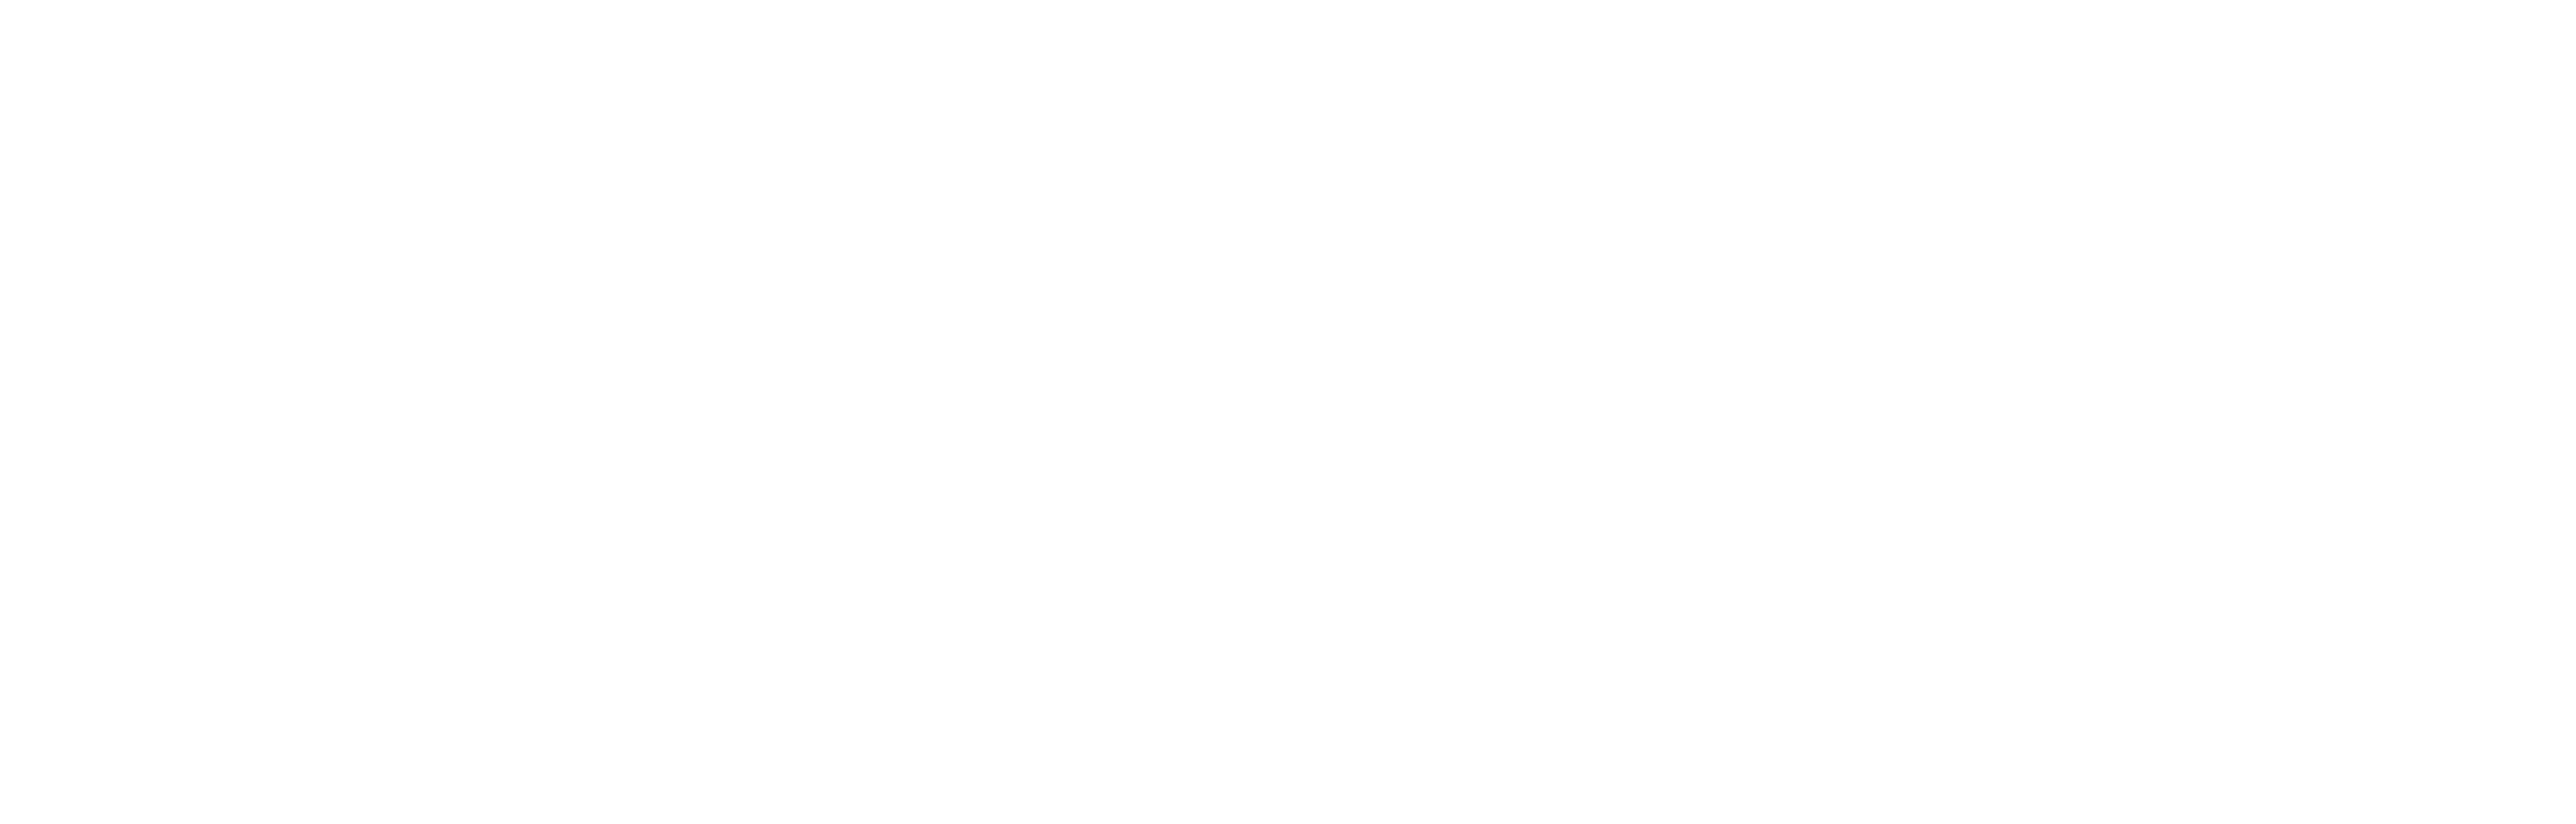 WEBFLEET-Logo